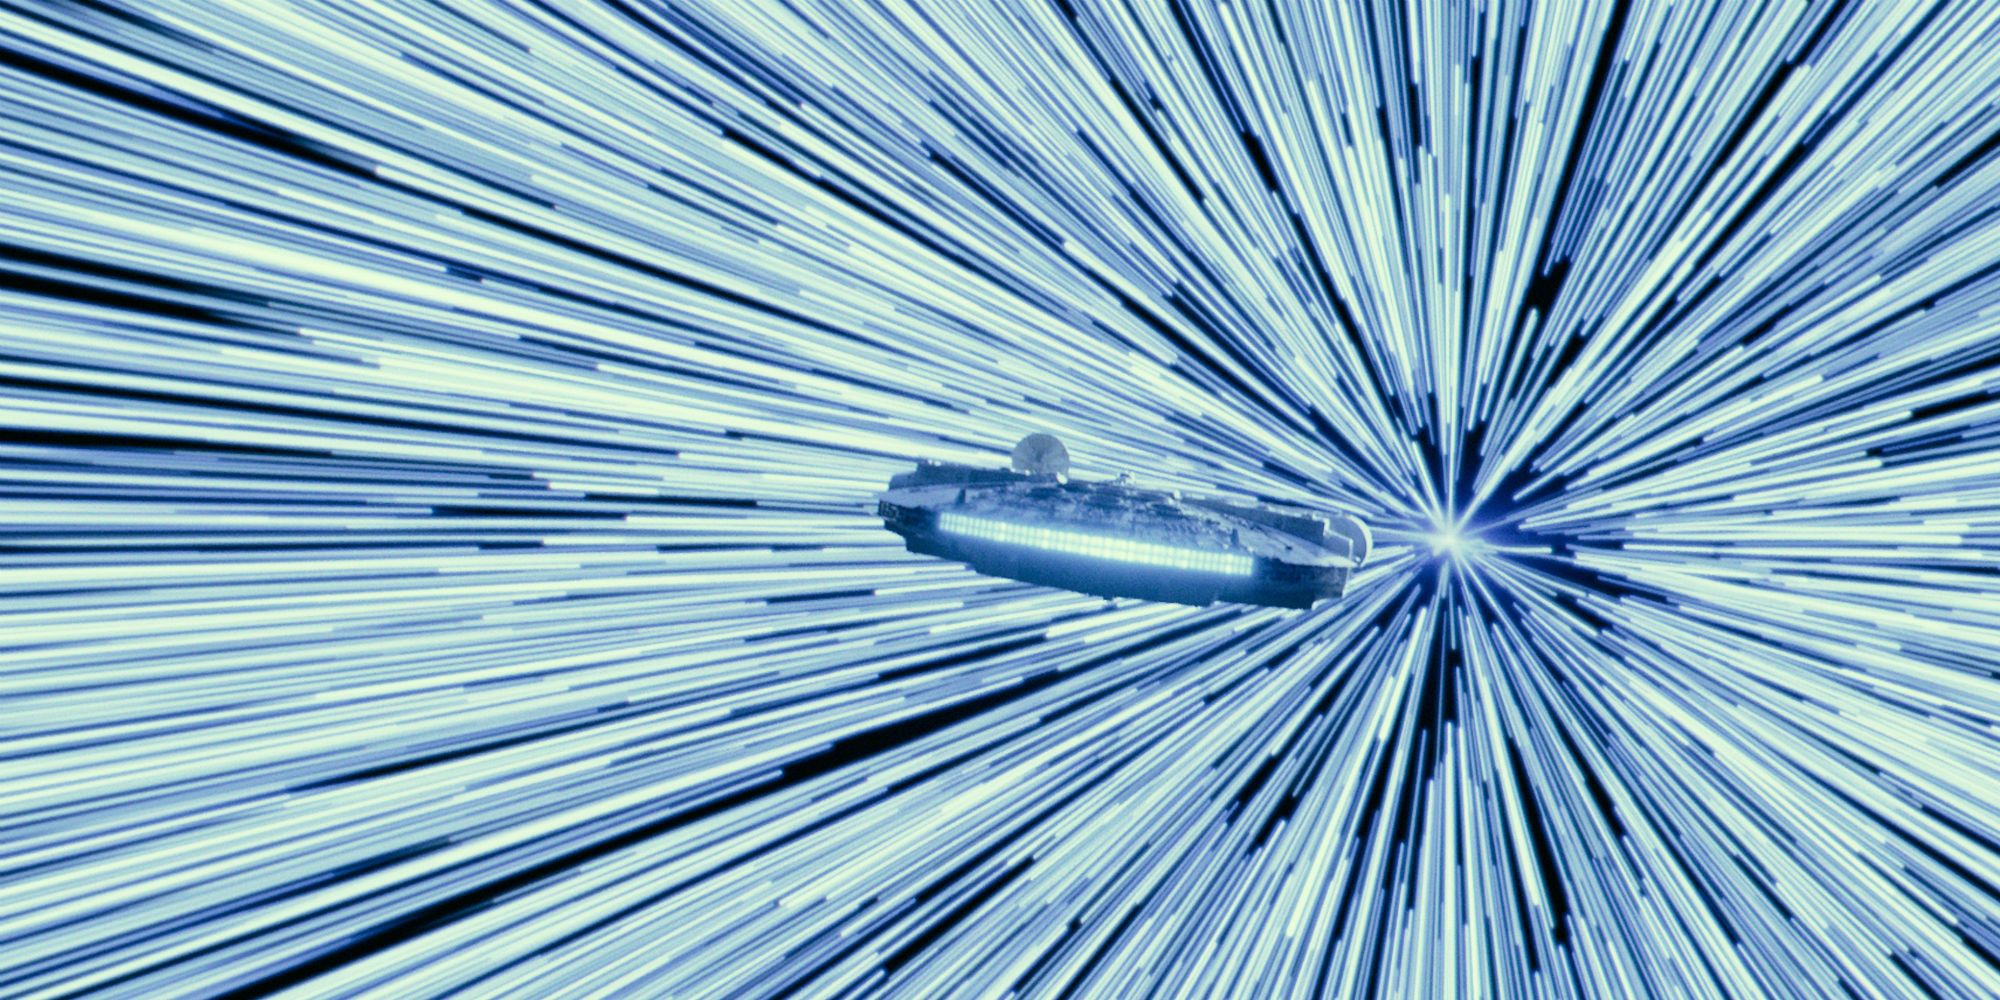 Star Wars The Rise of Skywalker Trailer - Millennium Falcon